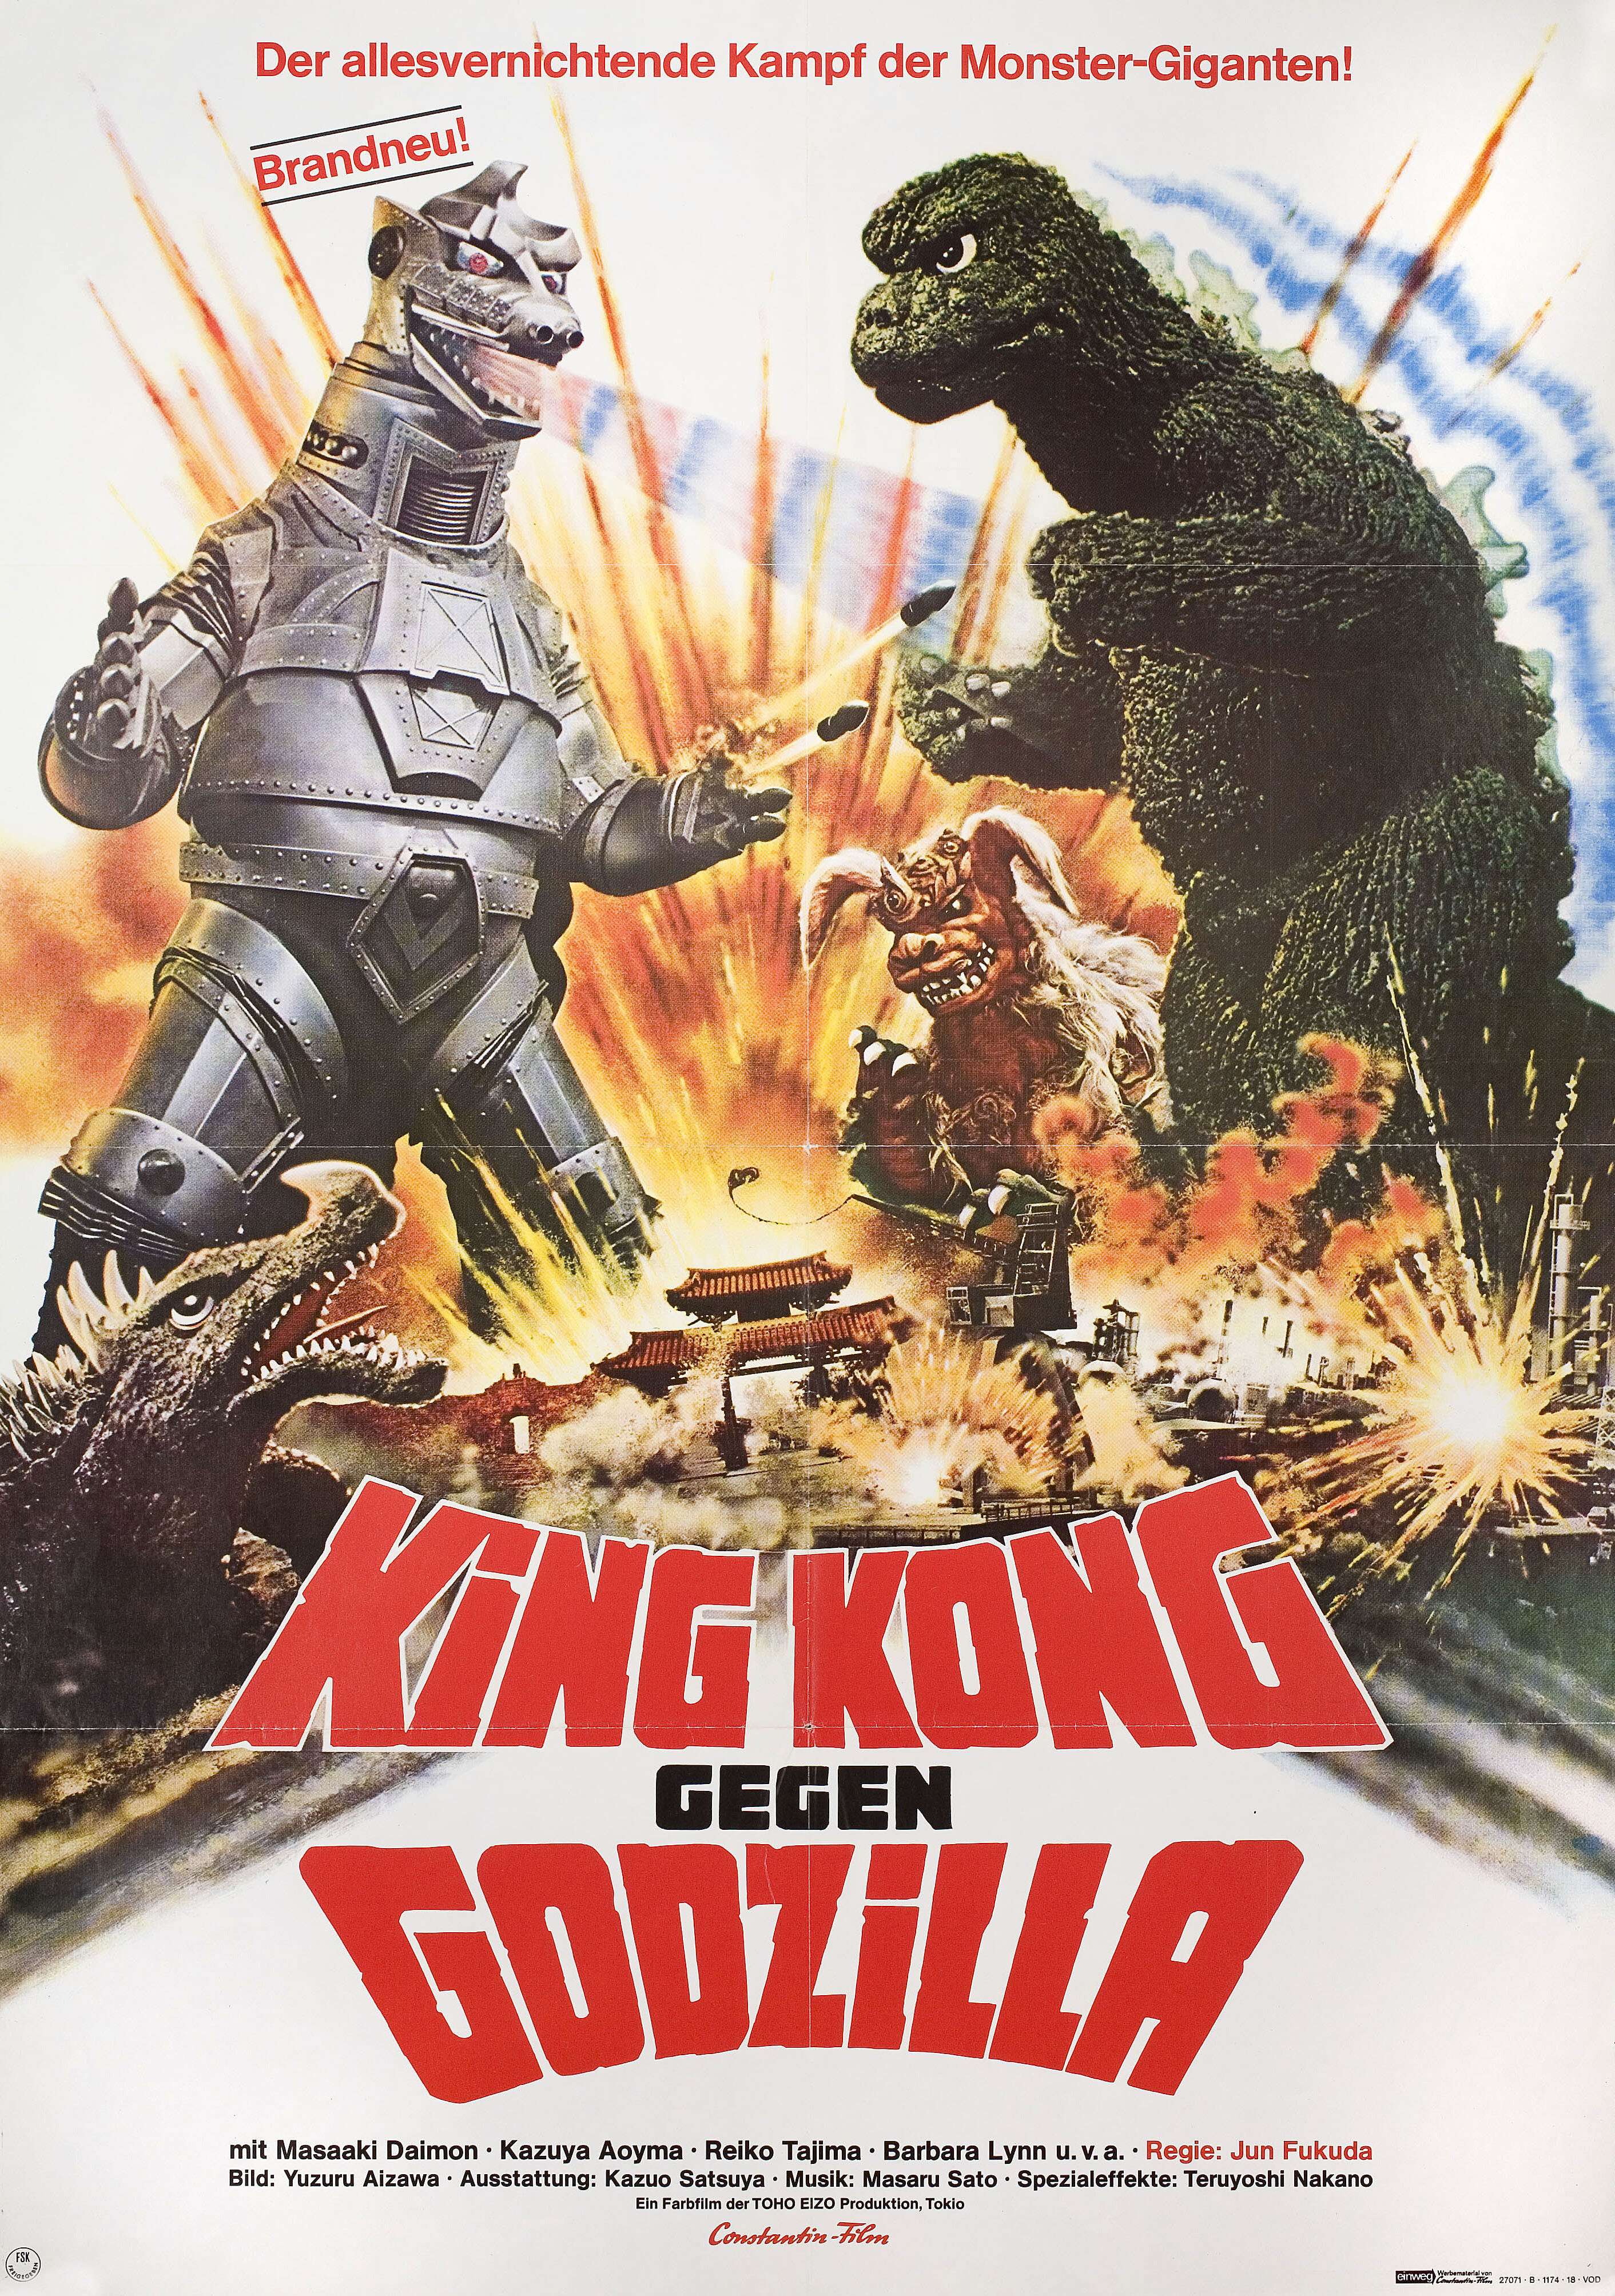 Кинг-Конг против Годзиллы (King Kong vs. Godzilla, 1962), режиссёр Иширо Хонда, немецкий (ФРГ) постер к фильму (монстры, 1963 год)